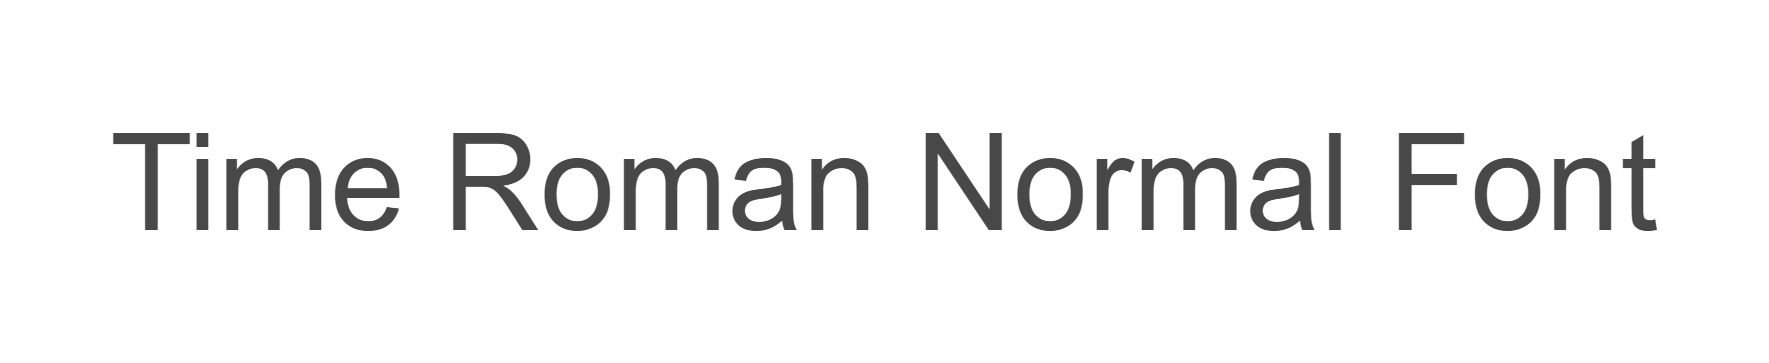 Time Roman Normal Font